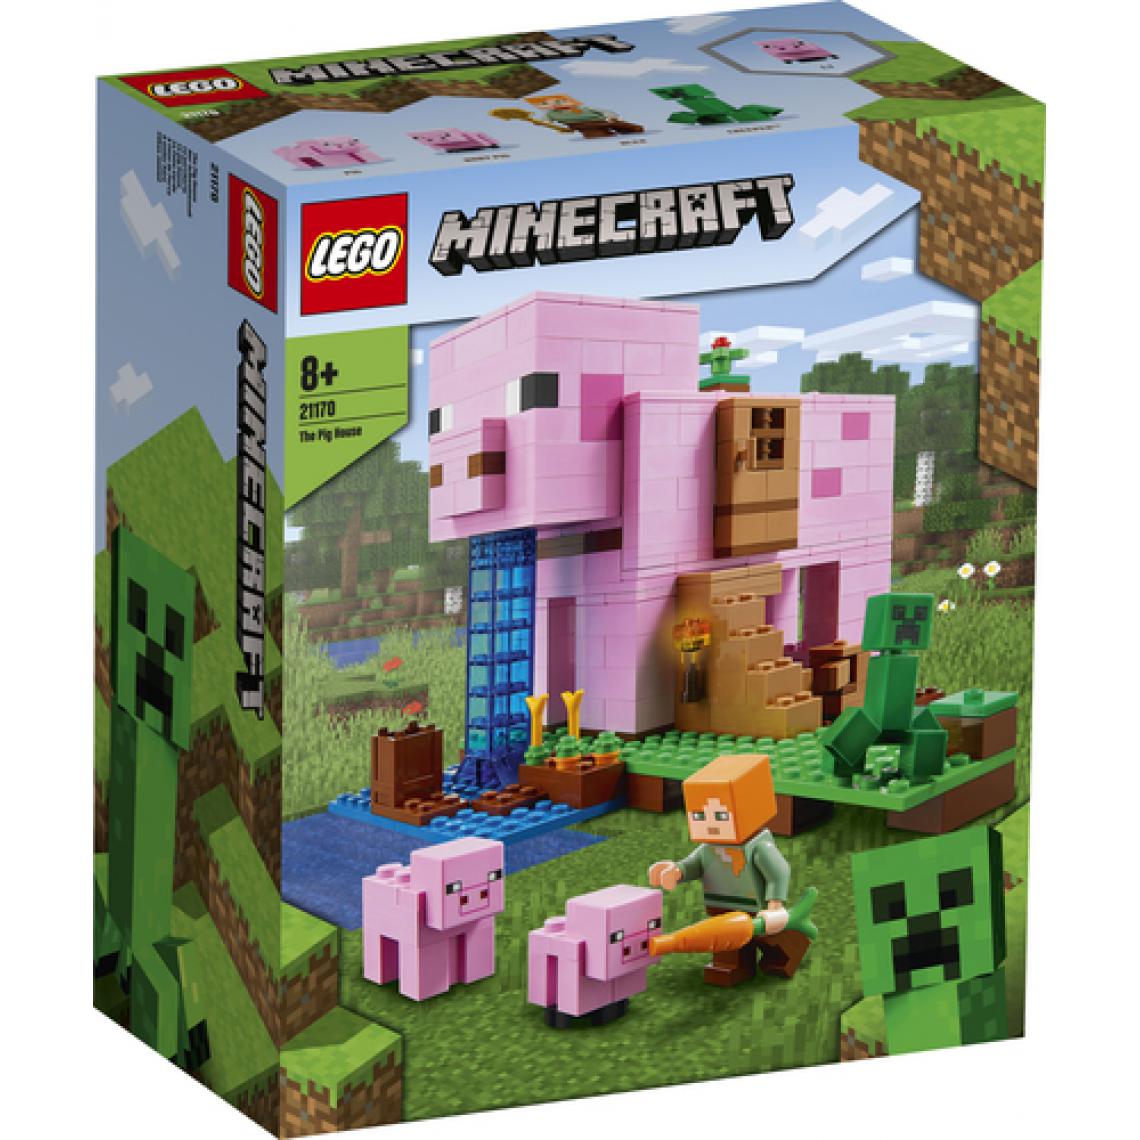 Lego - LEGO Minecraft 21170 Le jeu de construction de La Maison Cochon incluant les figurines d'Alex et de Creeper - Briques Lego